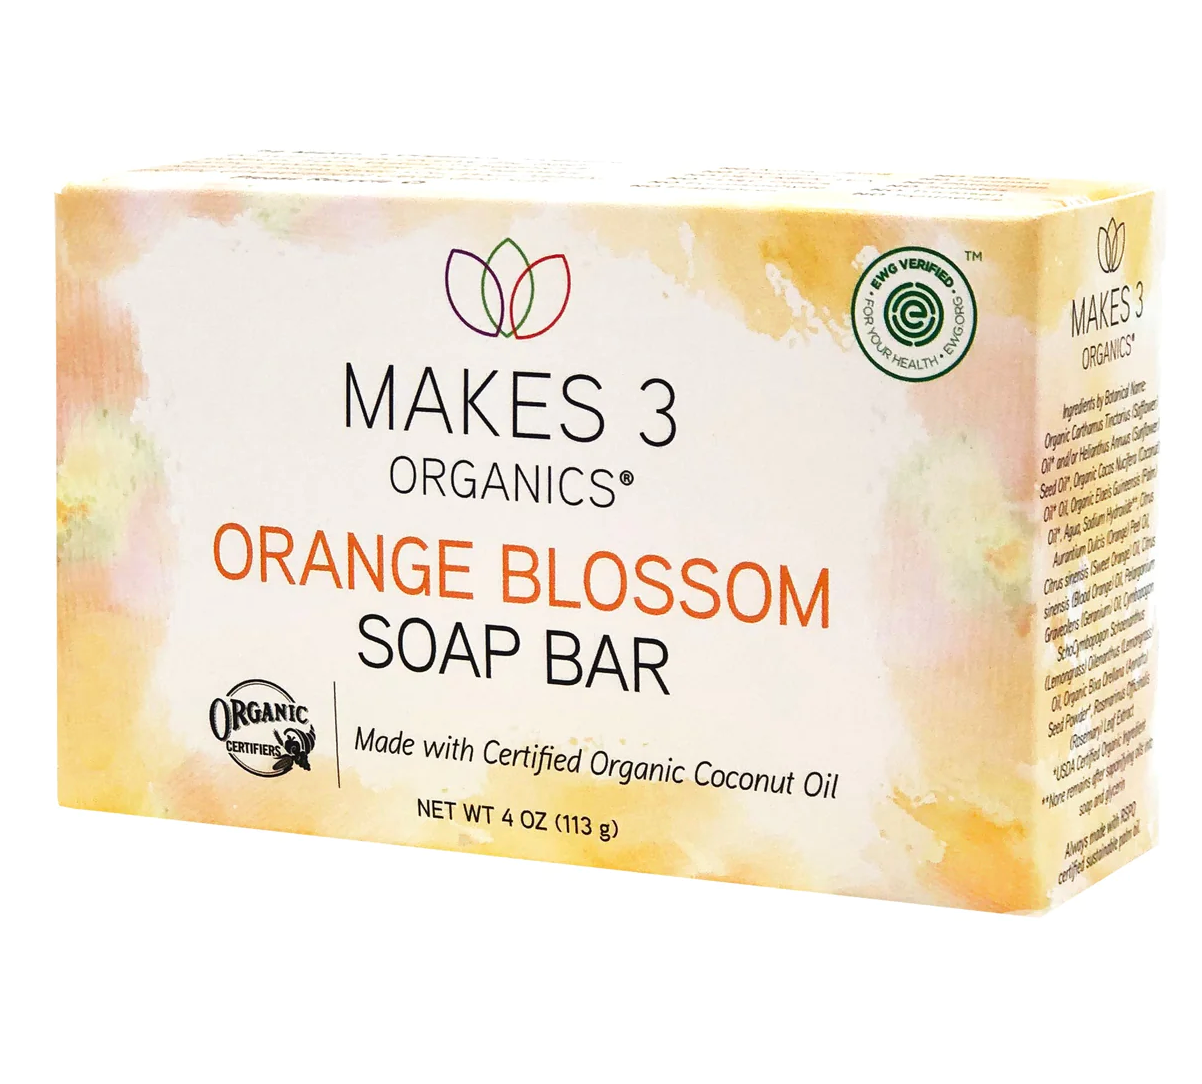 Makes 3 Organics Orange Blossom Organic Soap Bar